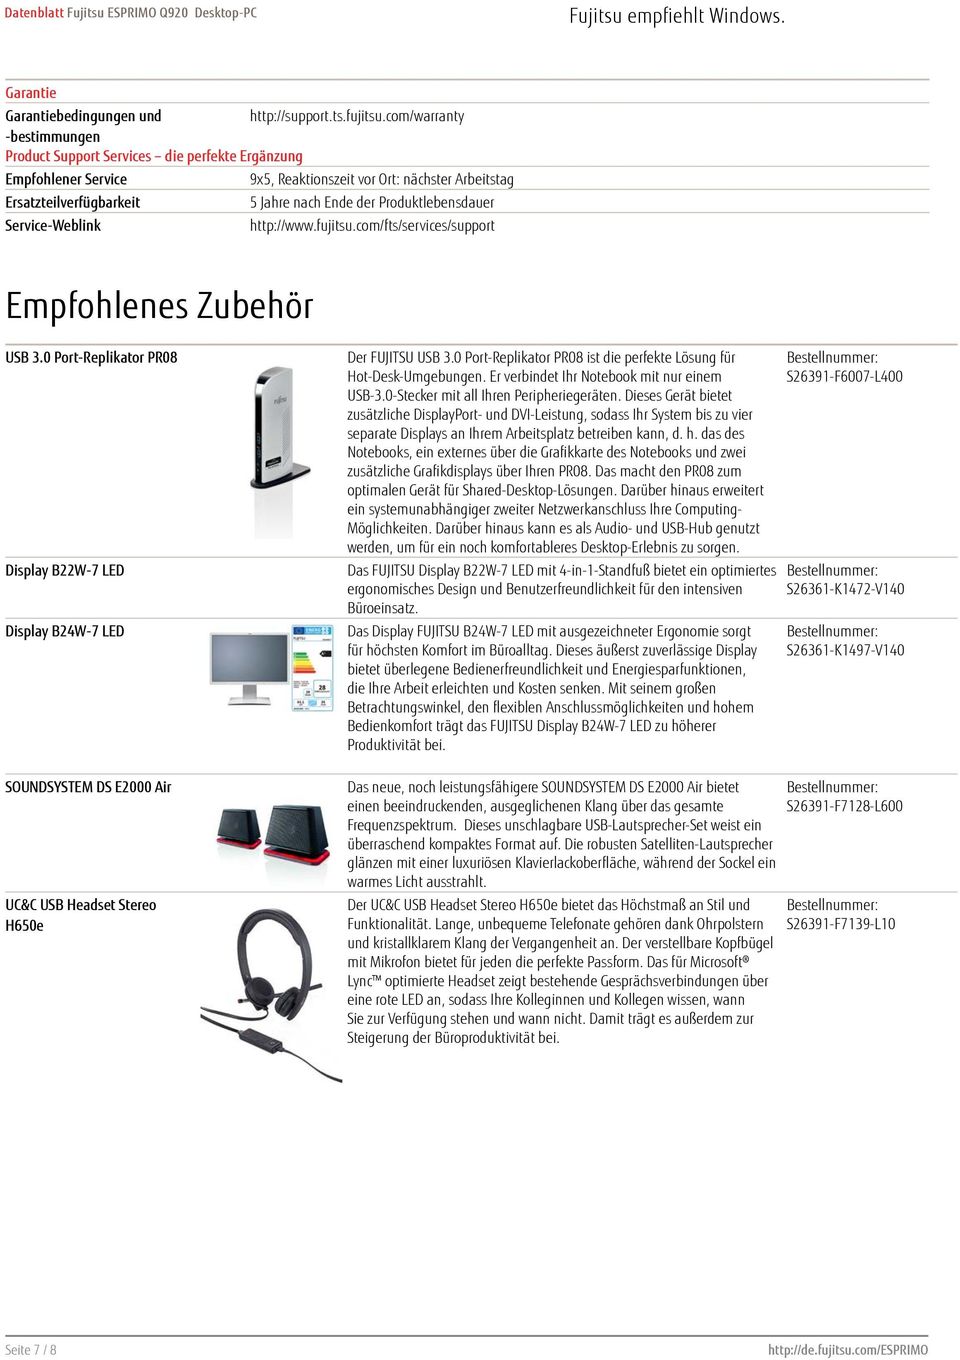 Produktlebensdauer Service-Weblink http://www.fujitsu.com/fts/services/support Empfohlenes Zubehör USB 3.